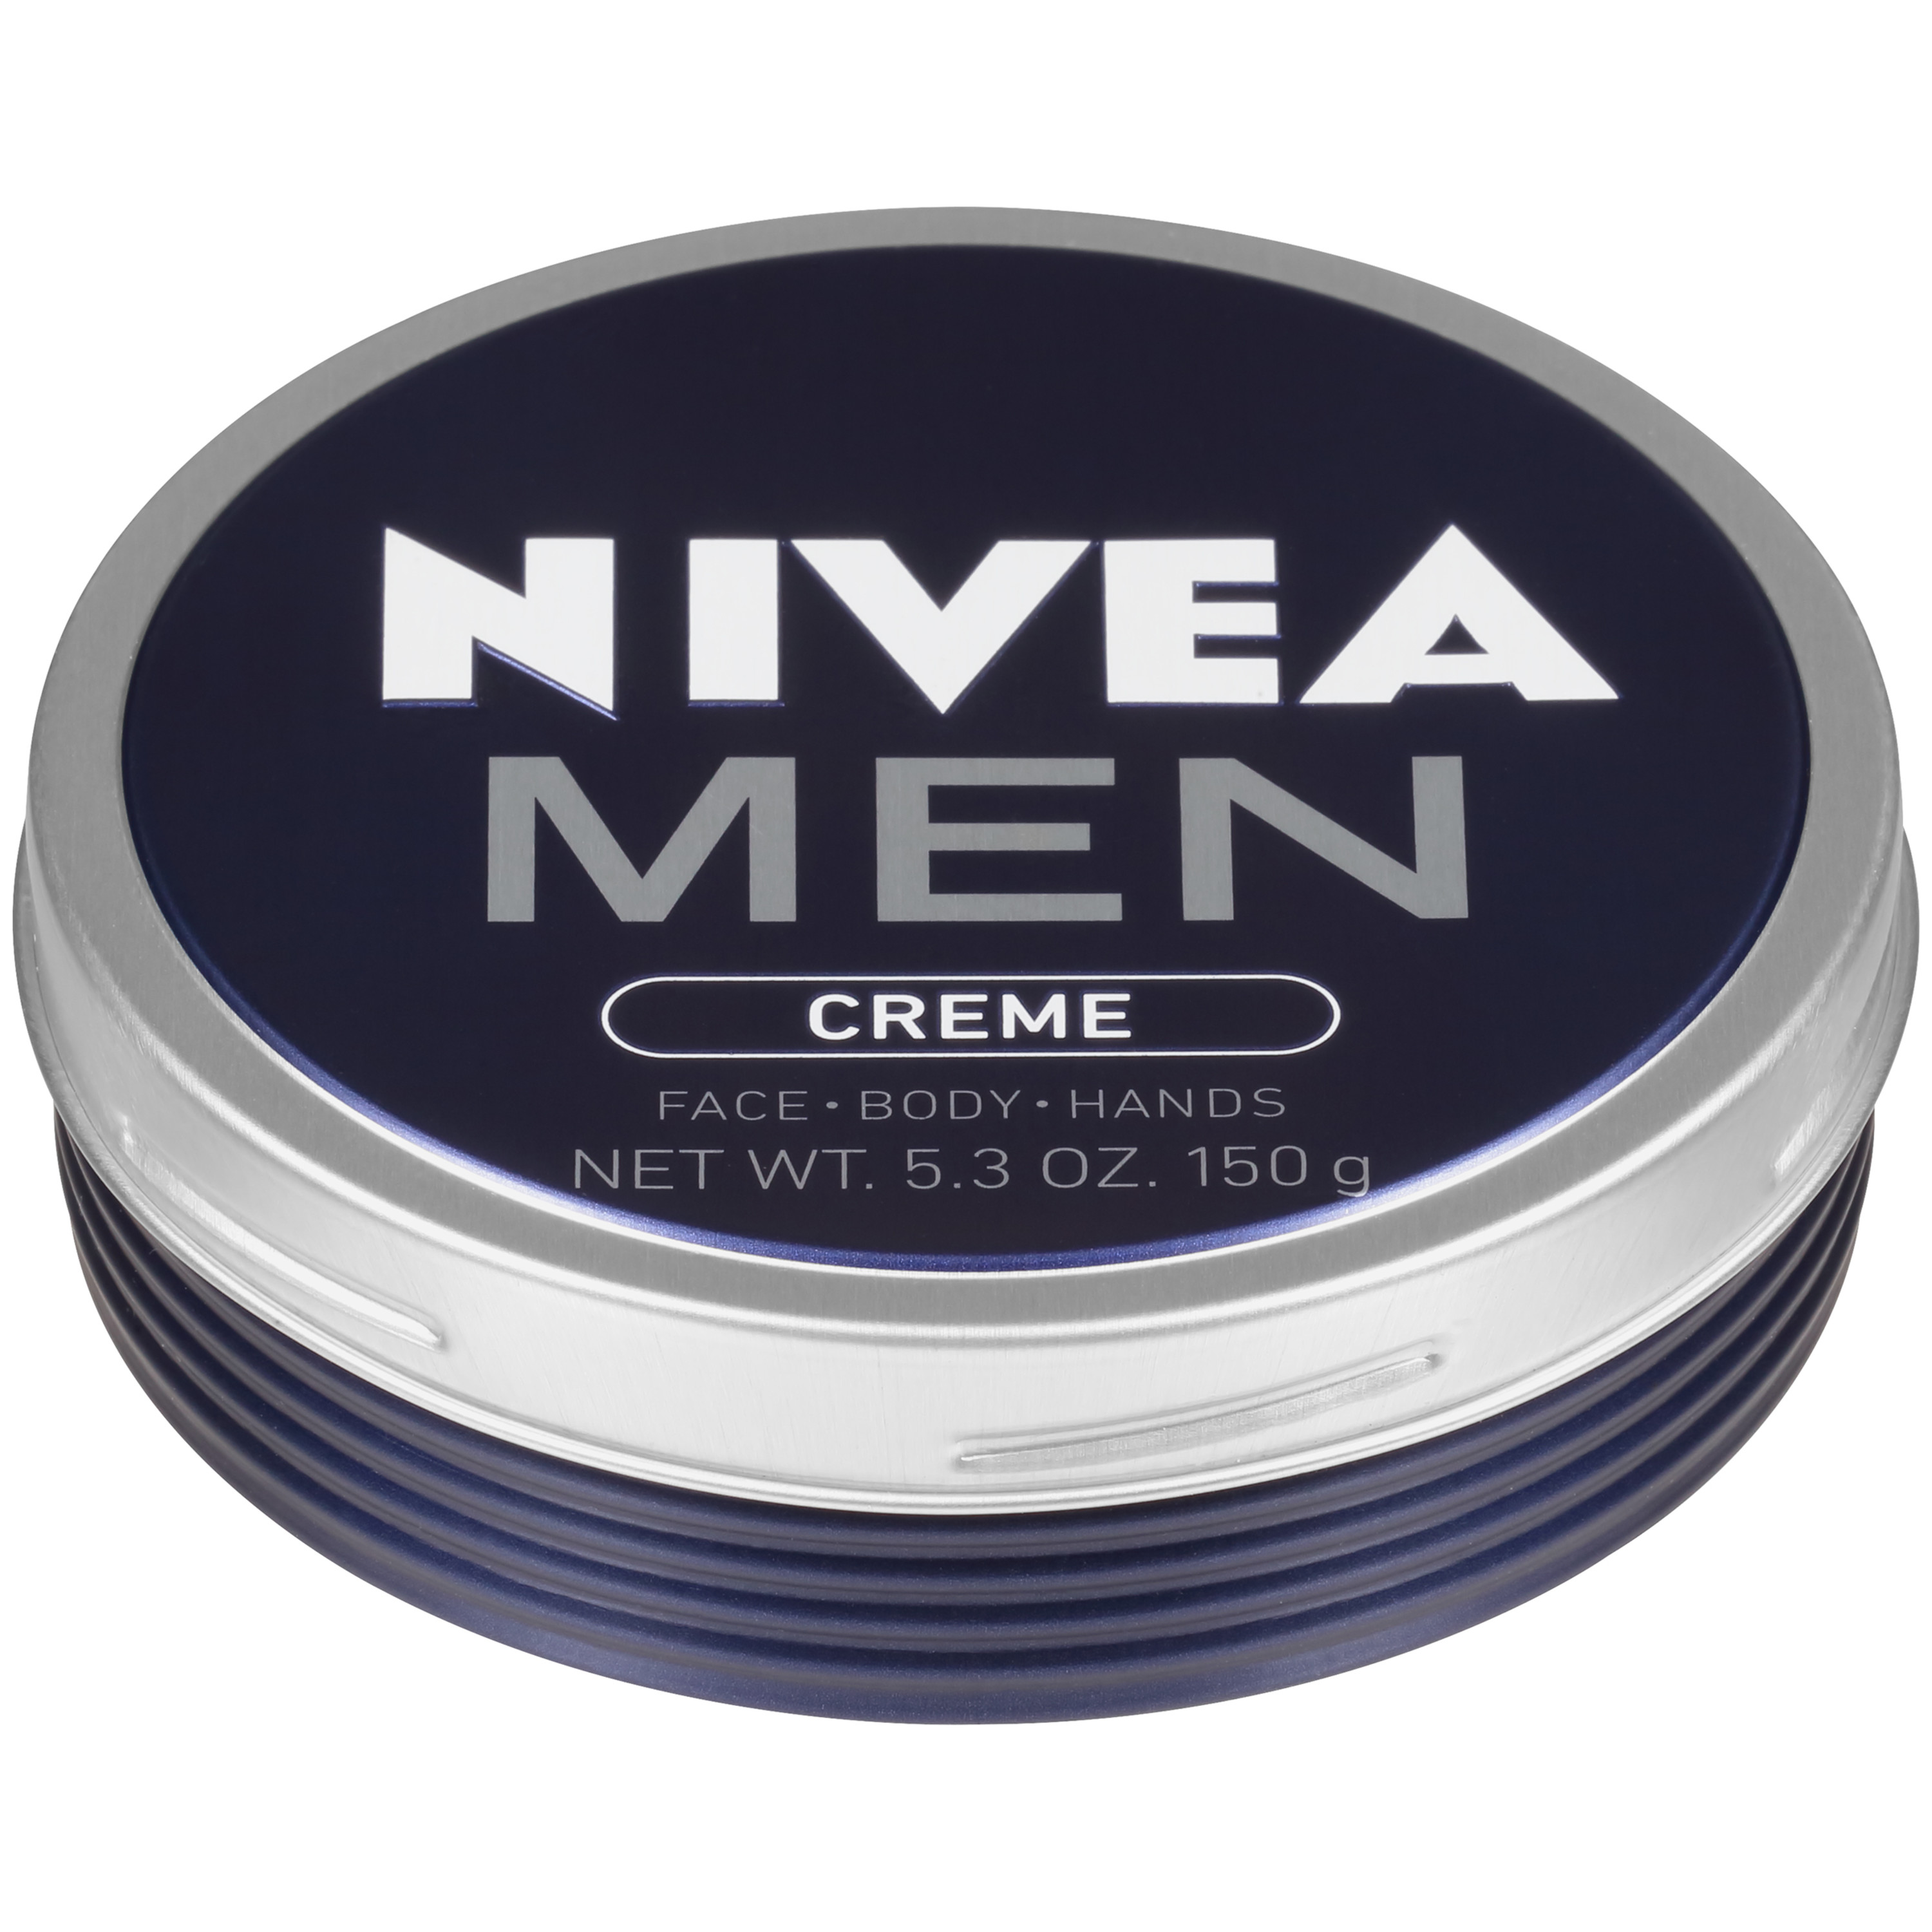 NIVEA MEN Creme, Face Hand and Body Cream, 5.3 oz. - image 1 of 6